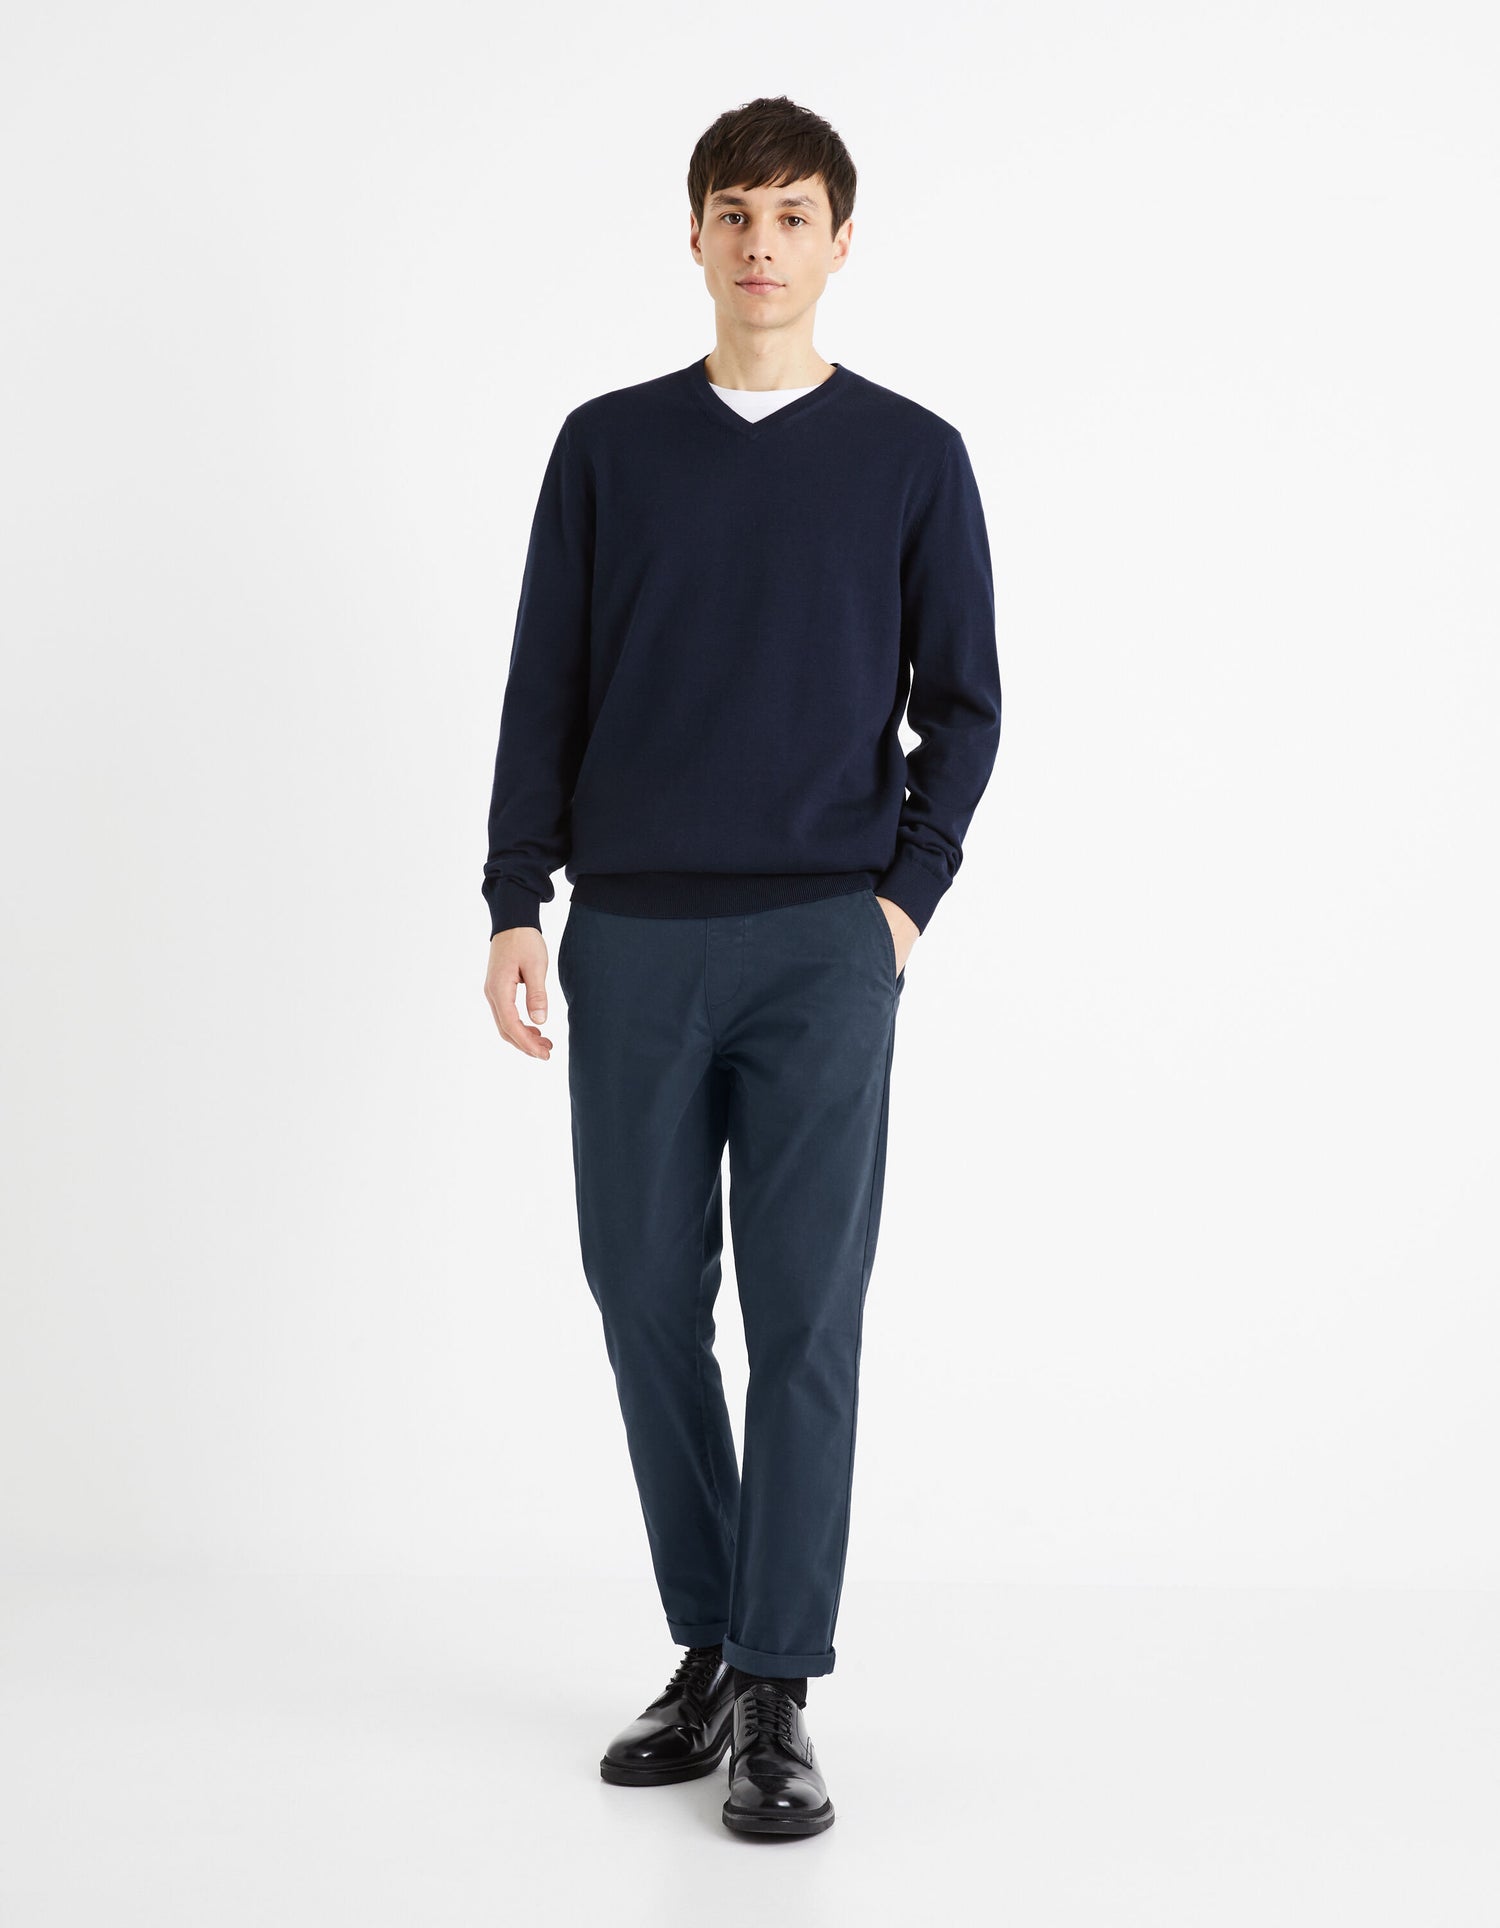 100% Cotton V-Neck Sweater - Navy_DECOTON_NAVY_03